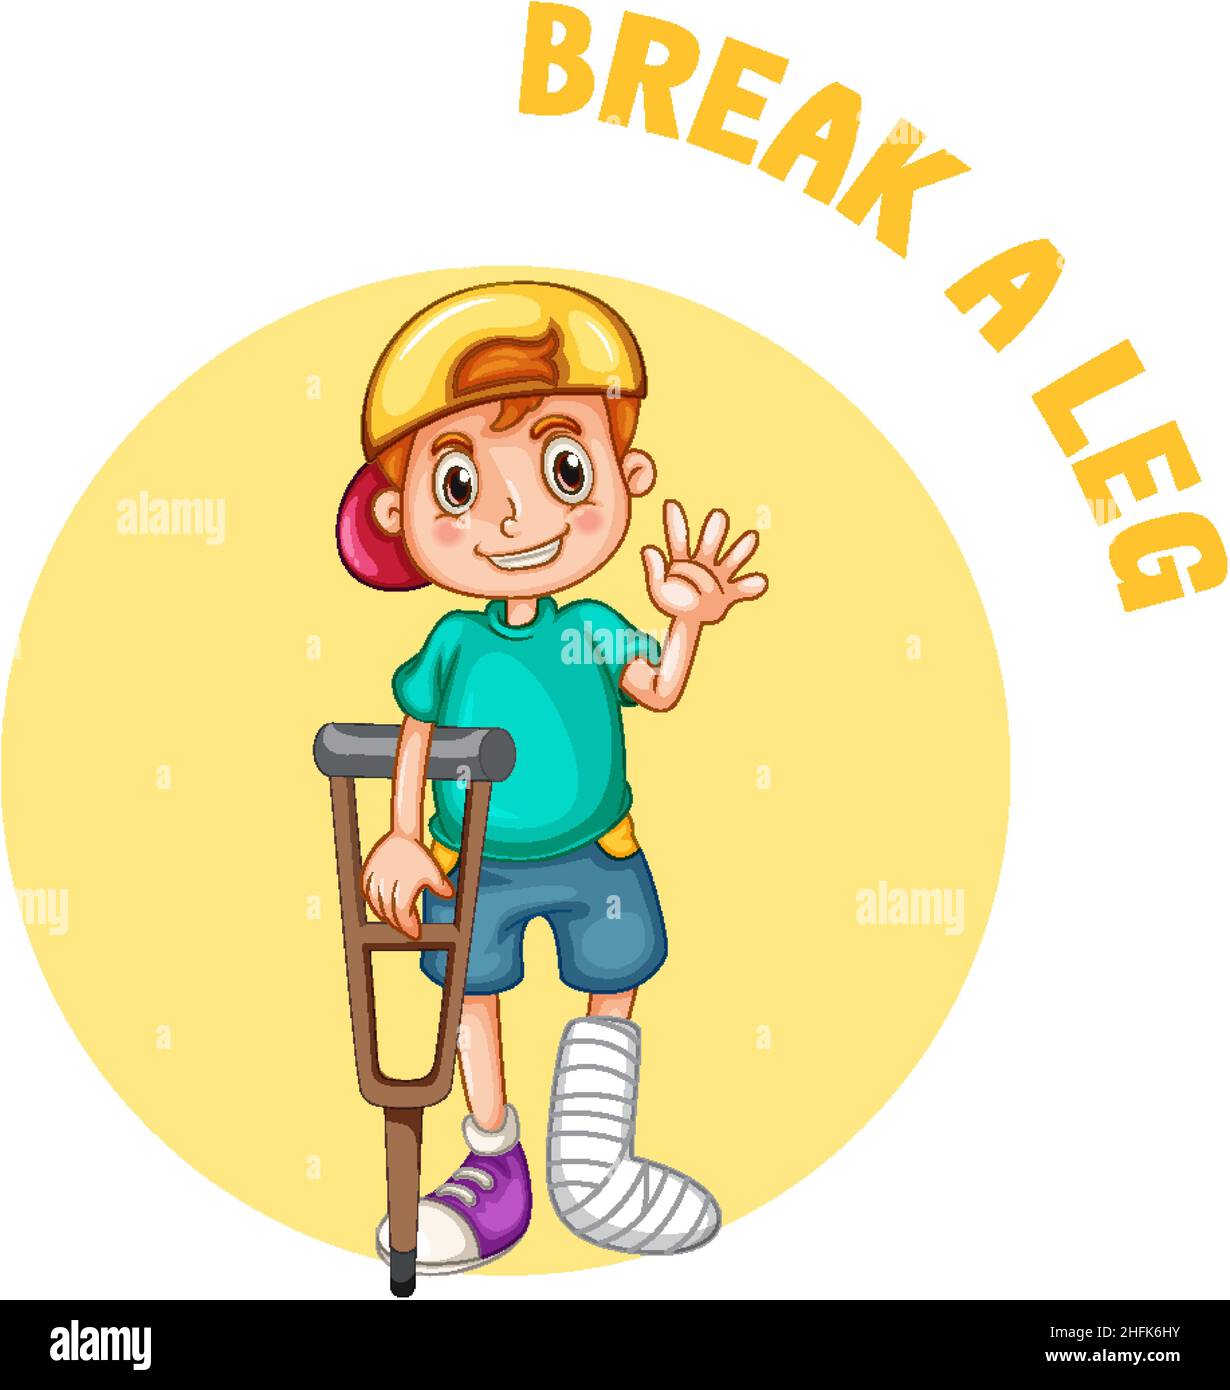 English idiom with picture description for break a leg illustration Stock  Vector Image & Art - Alamy